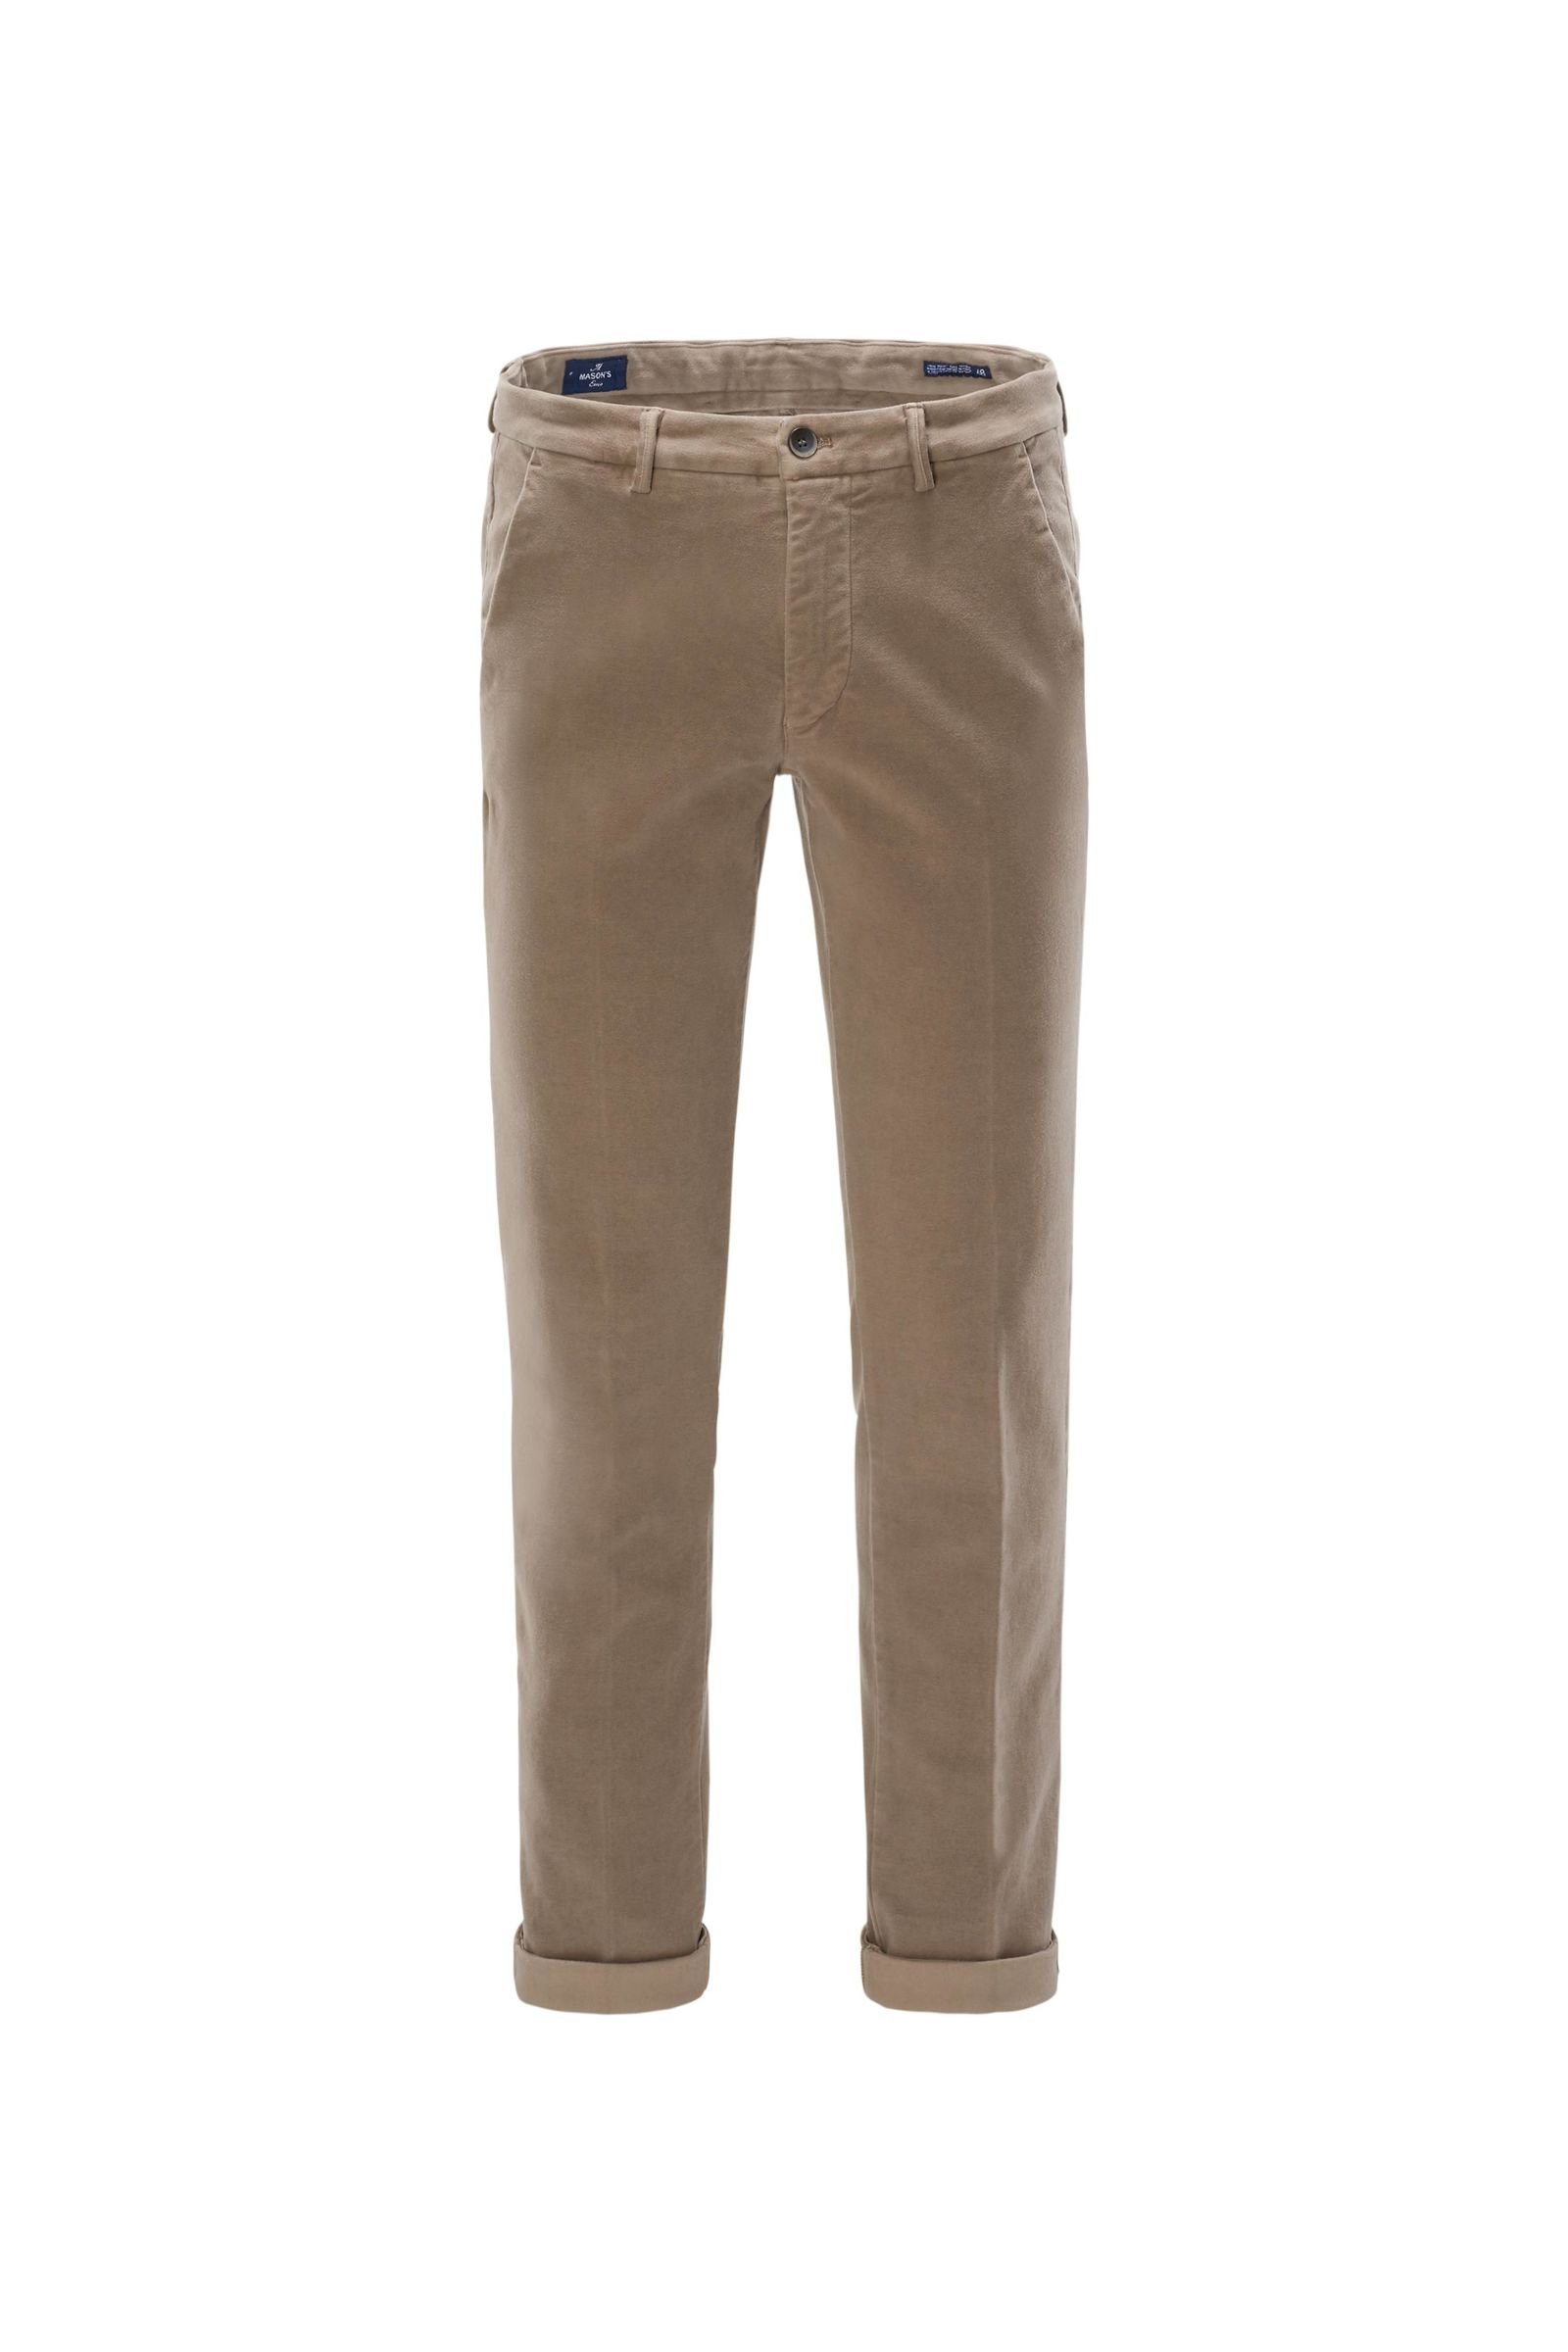 Fustian trousers 'Torino' grey-brown